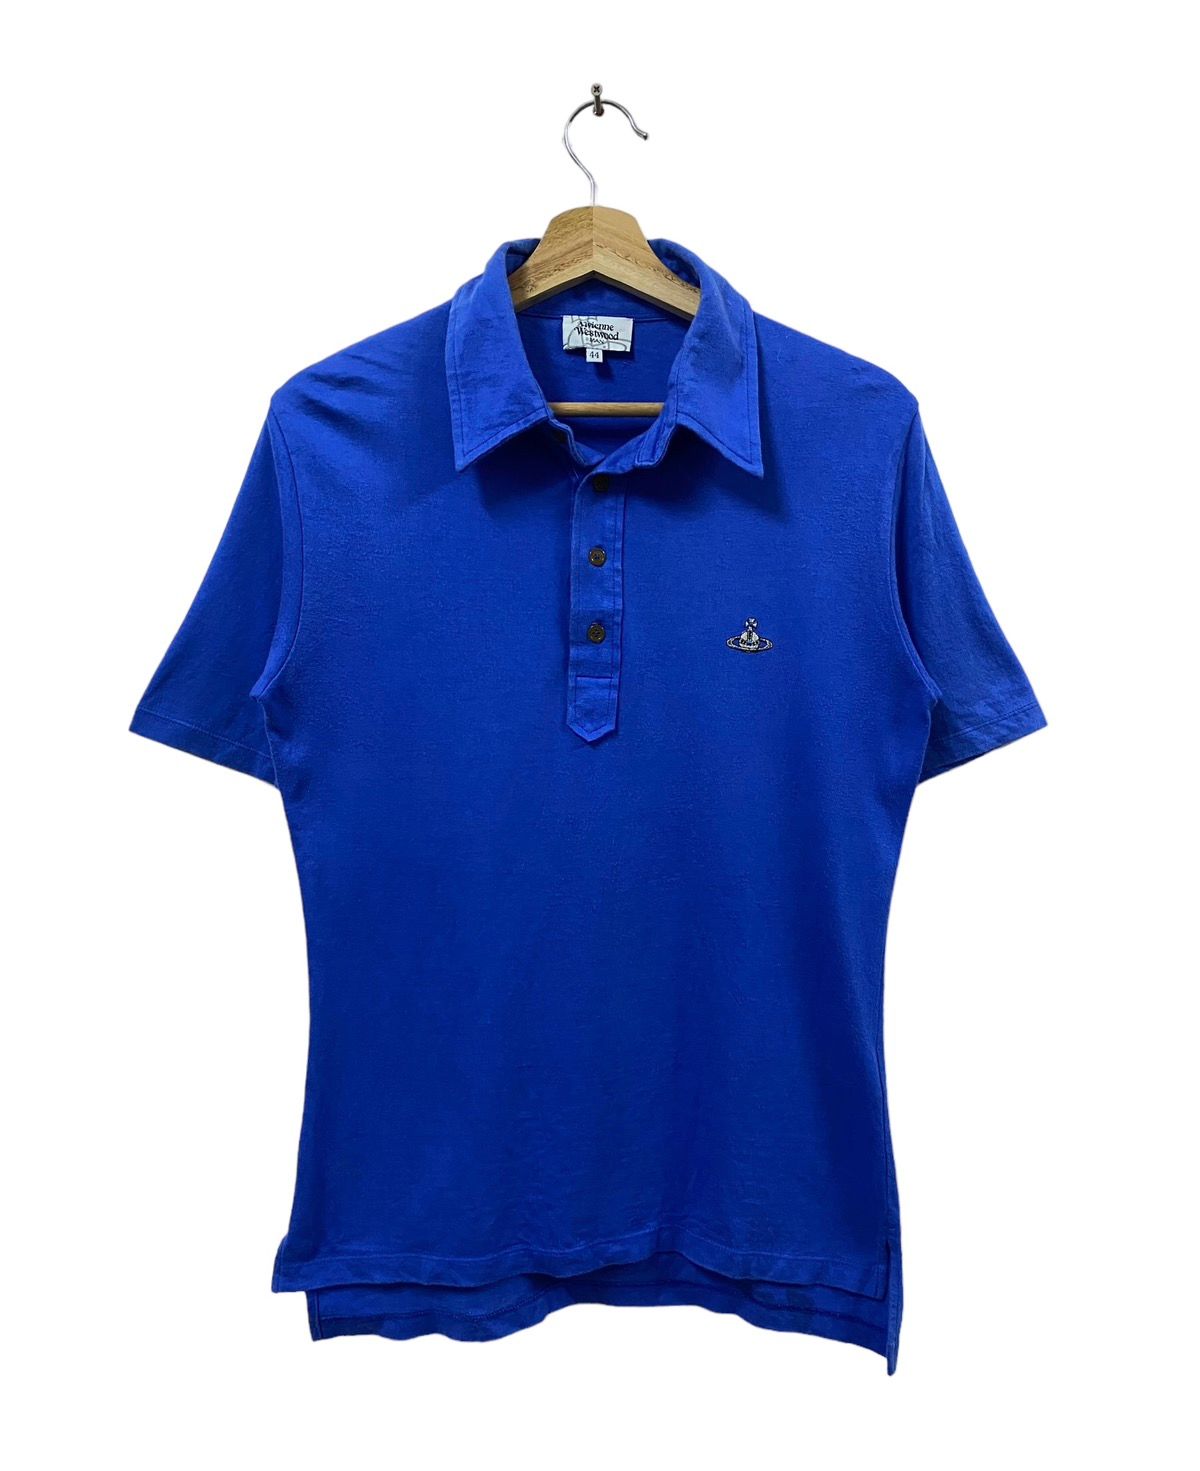 Vivienne Westwood Man Polo Shirt - 1